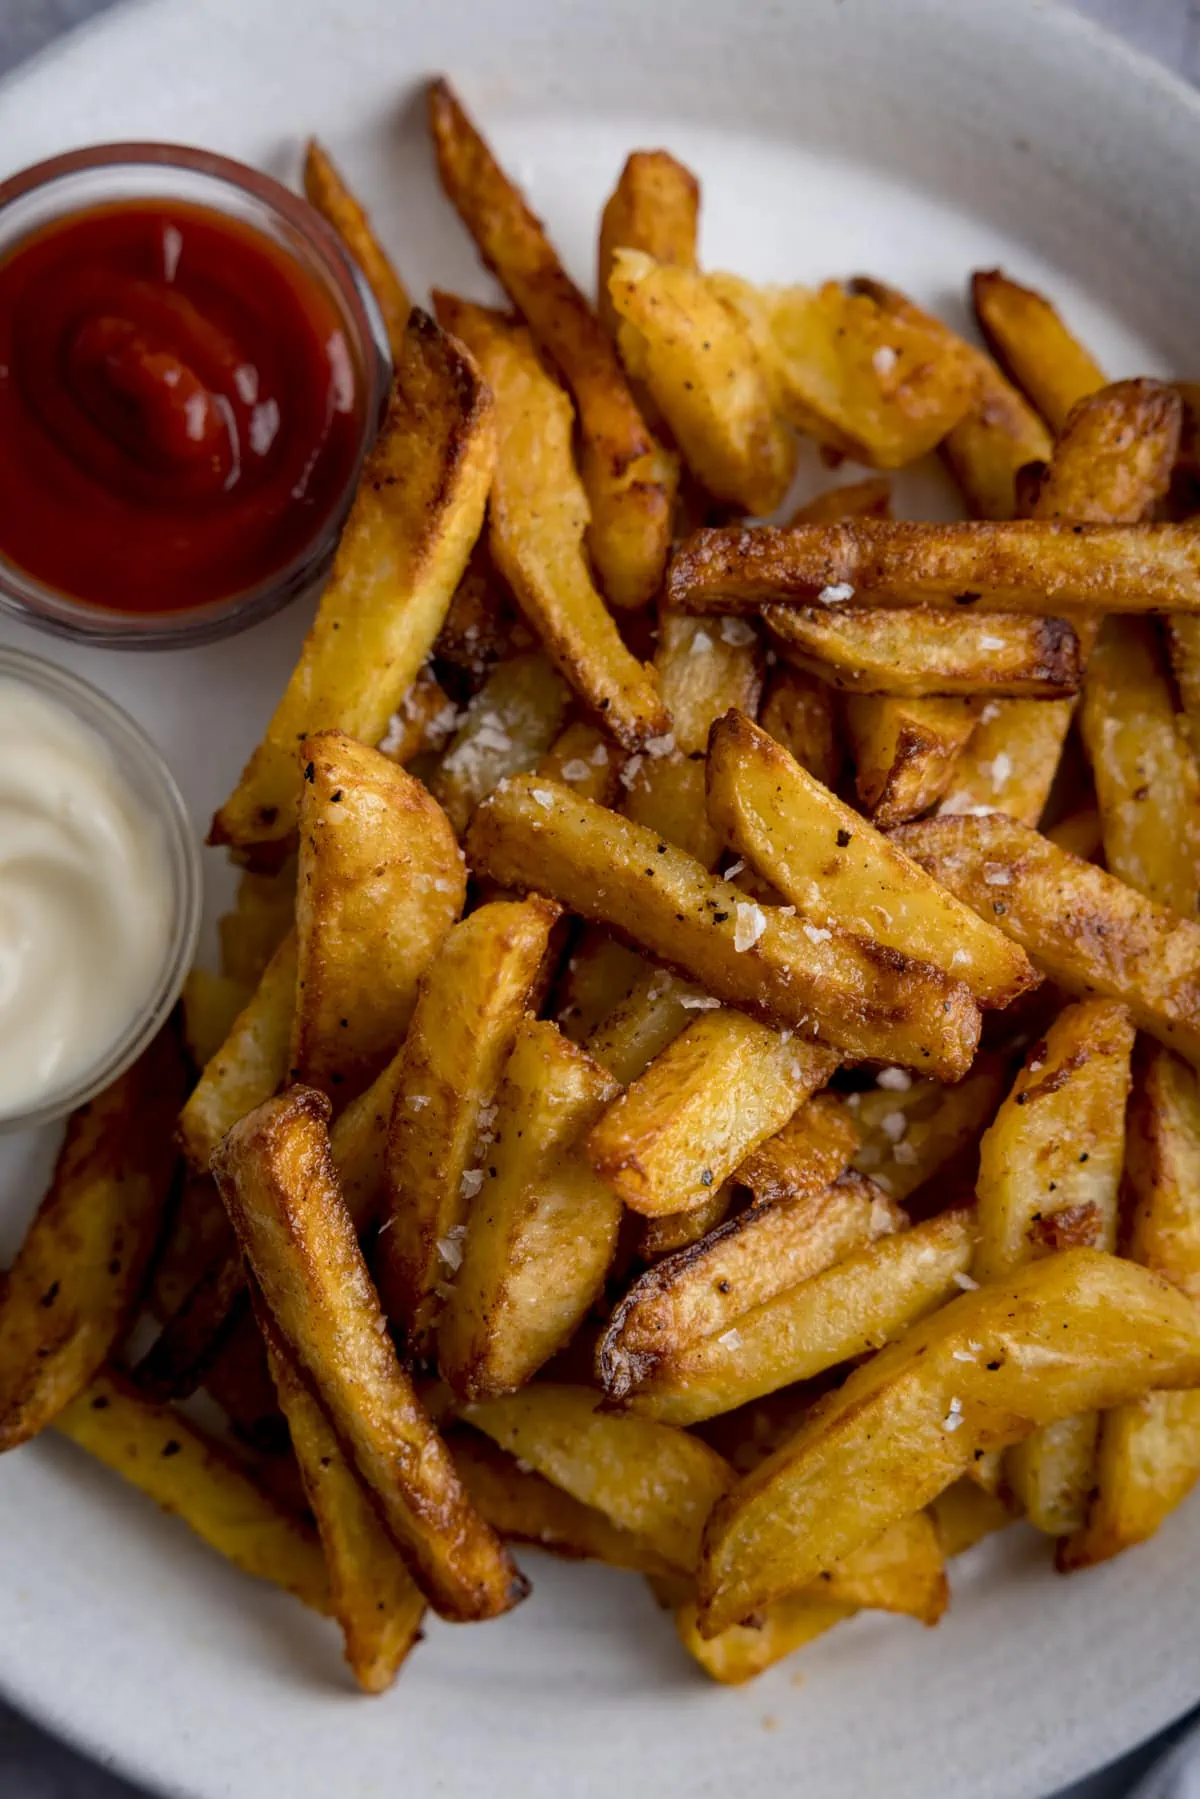 Best Homemade Chips Recipe - How To Make Homemade Potato Chips